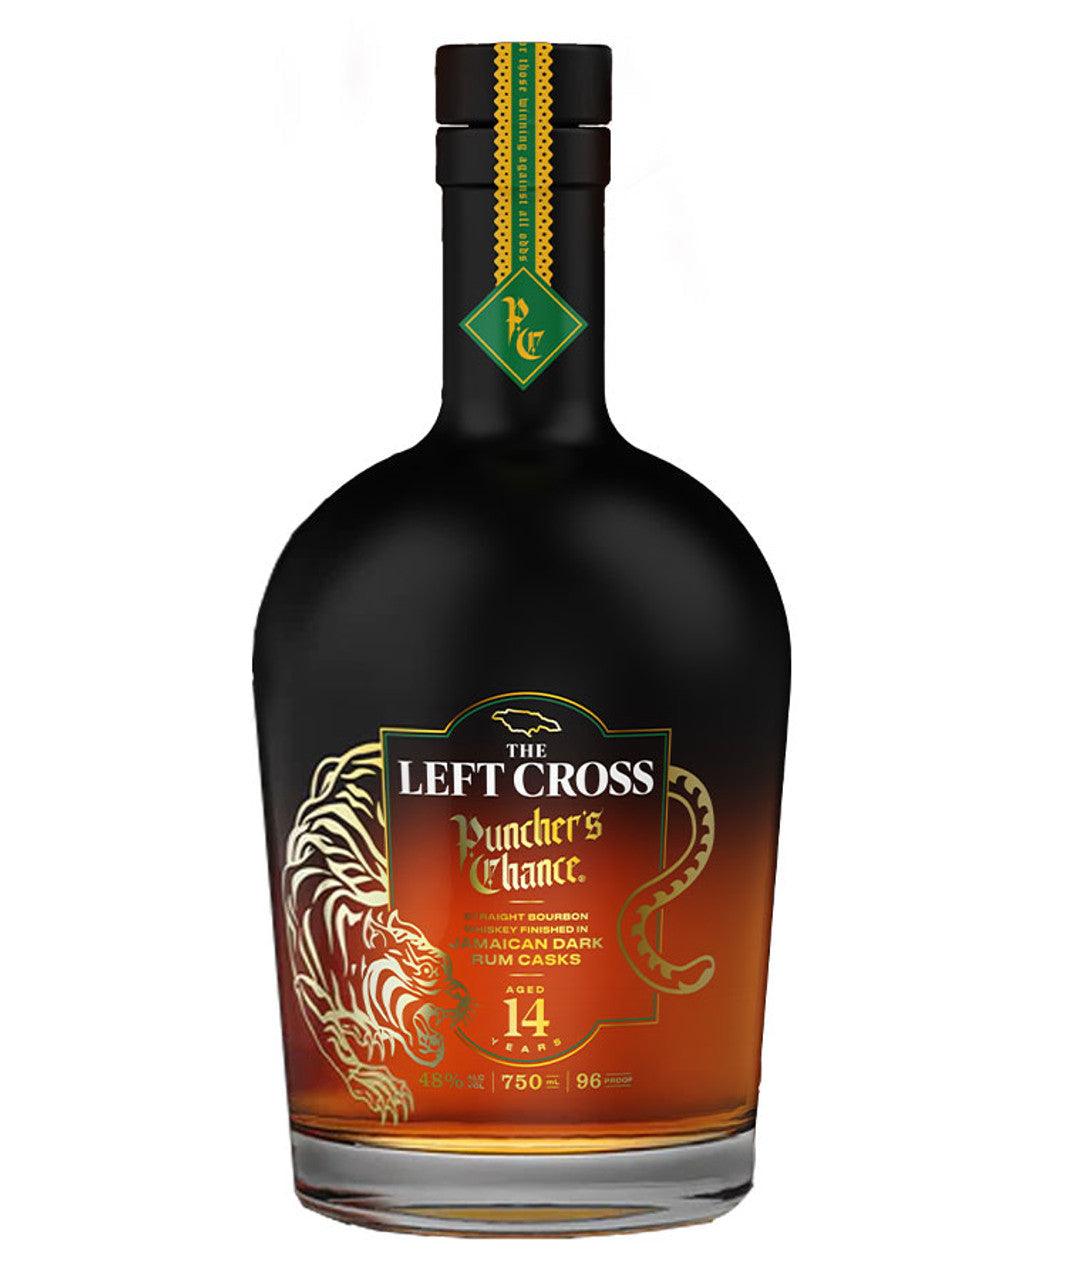 Puncher’s Chance Bourbon The Left Cross Jamaican Dark Rum 14 Years Old - Liquor Luxe